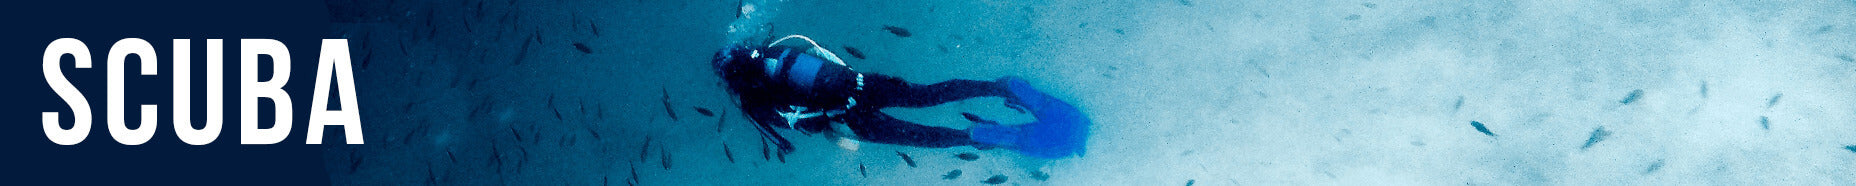 Scuba. Diver in the ocean. 